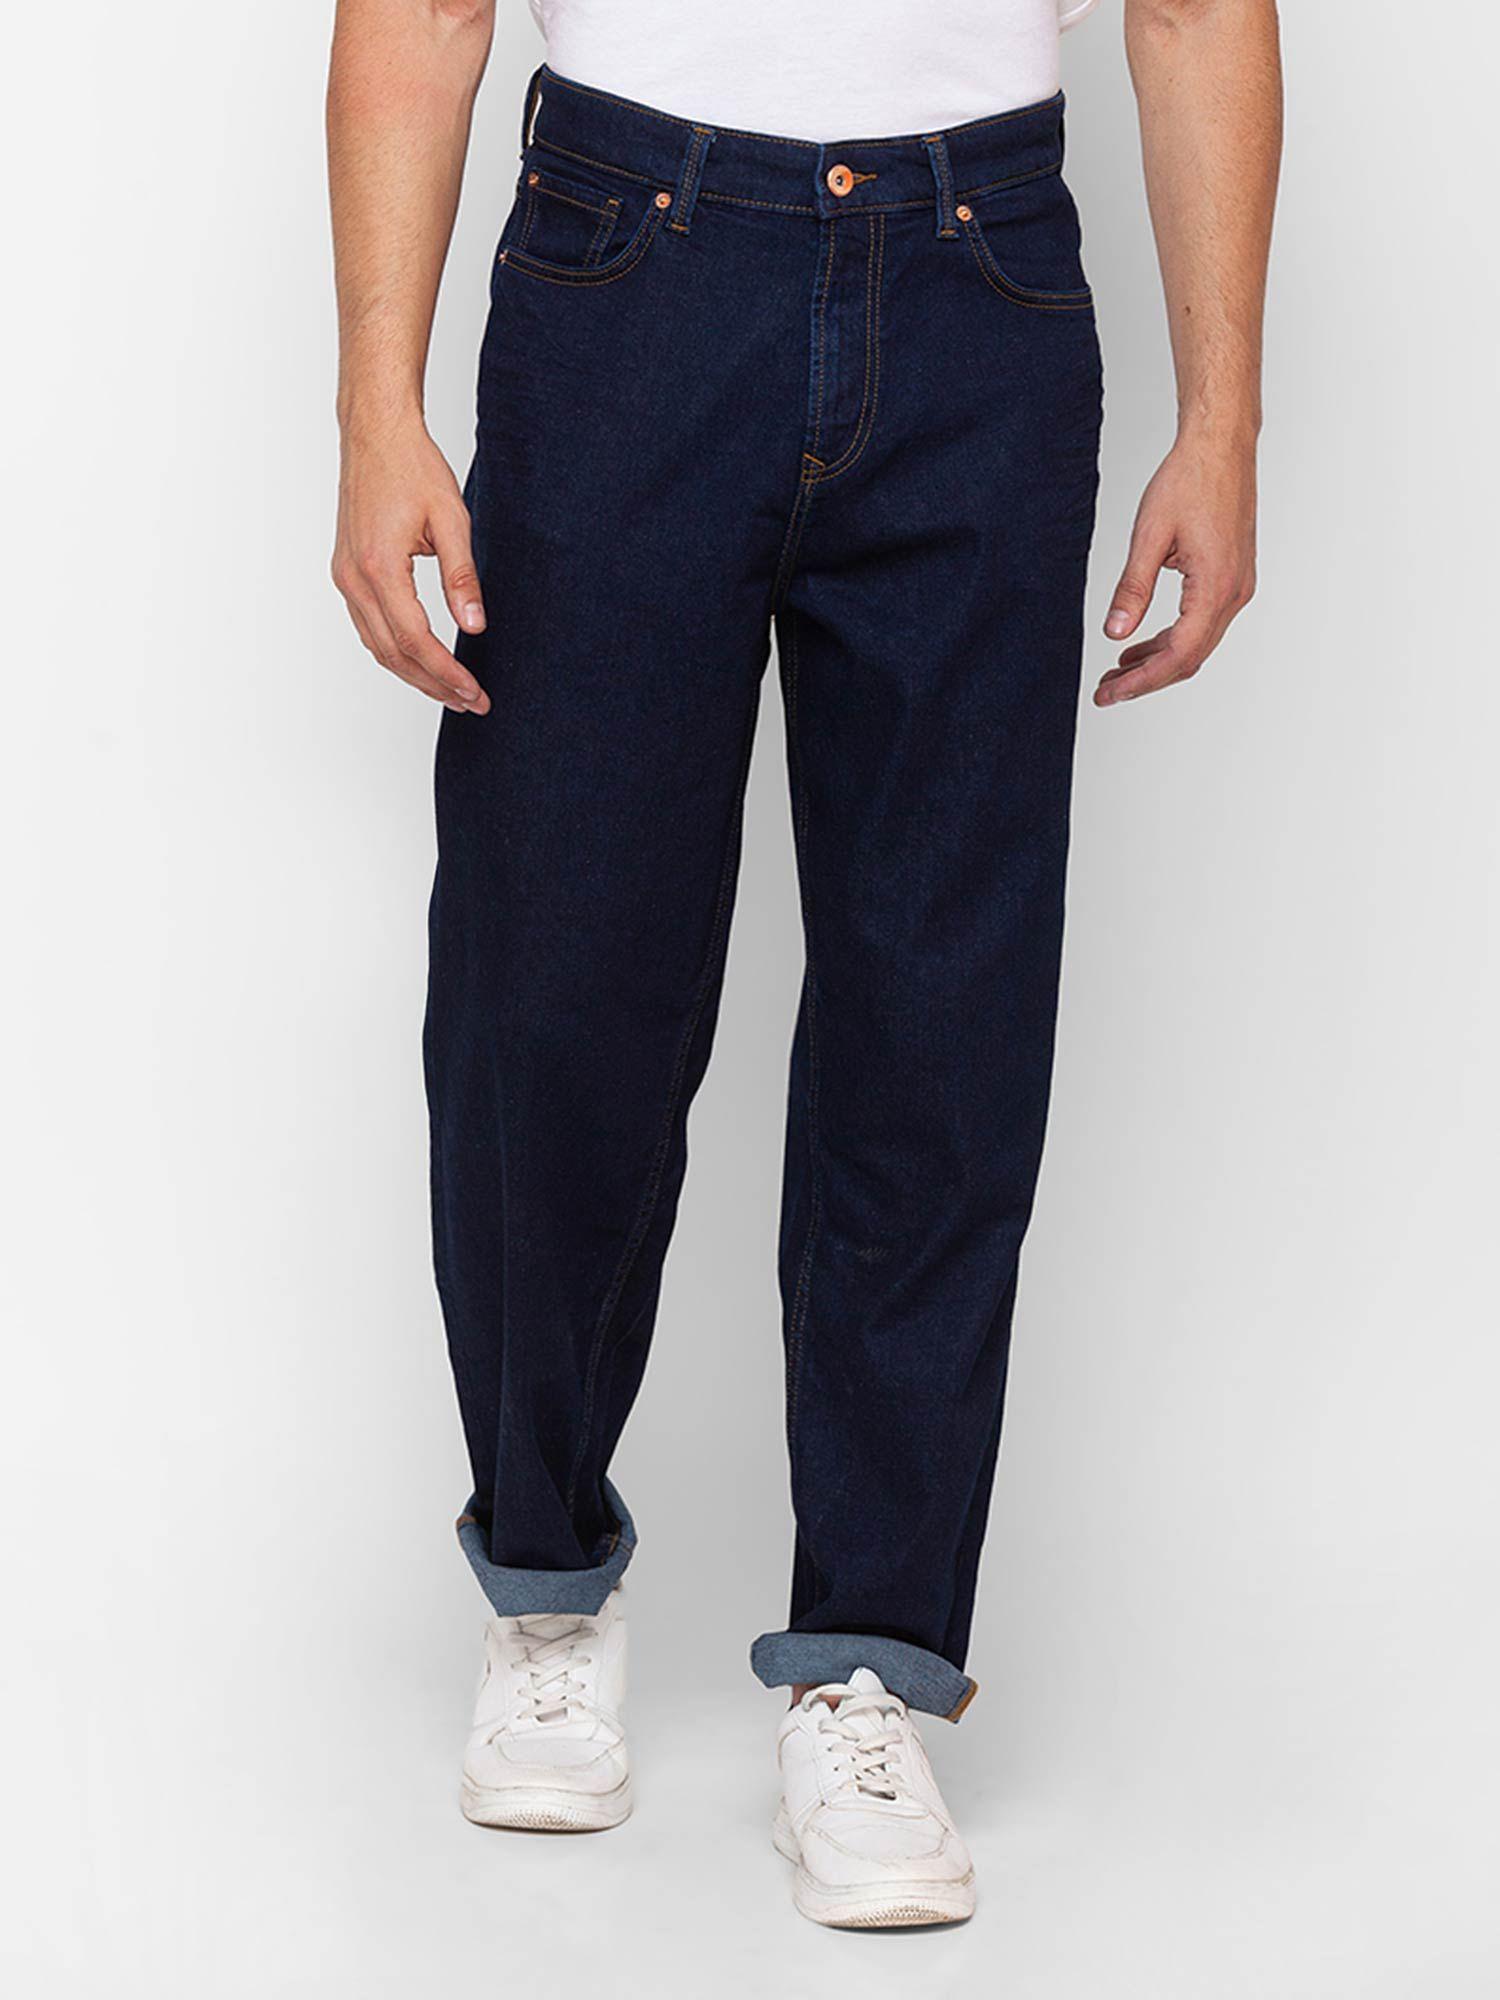 raw blue cotton loose fit regular length jeans for men (renato)